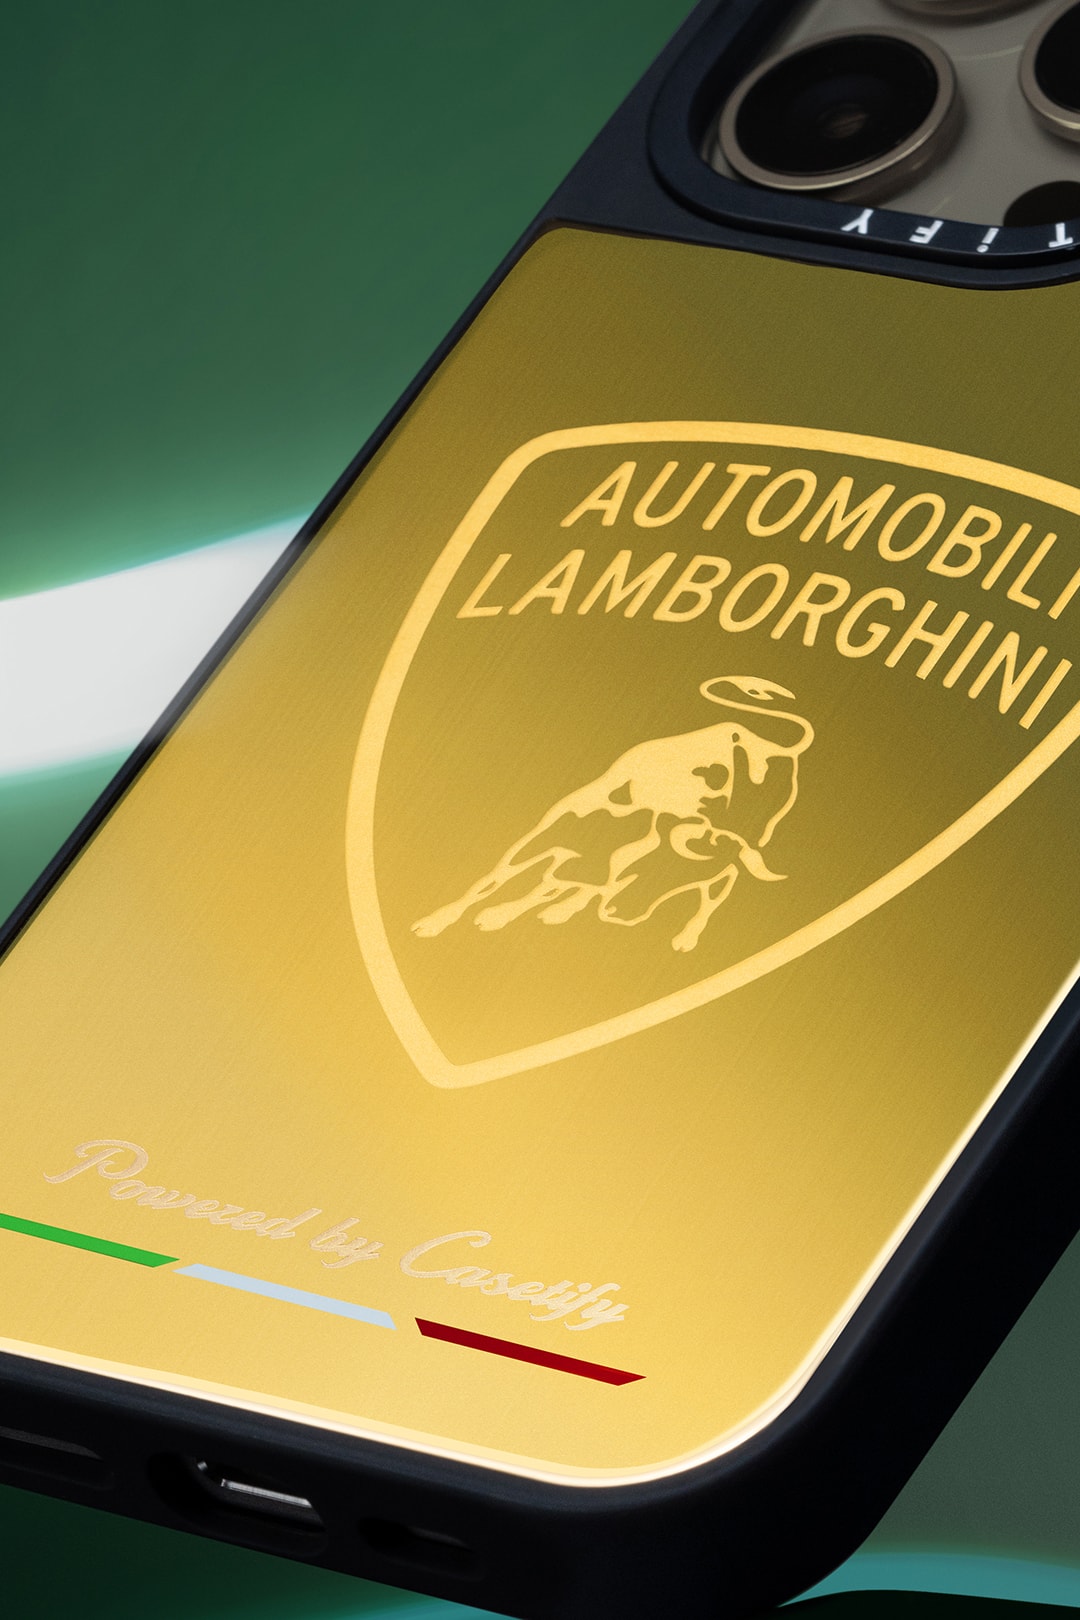 CASETiFY 推出 Automobili Lamborghini 60 周年纪念系列 